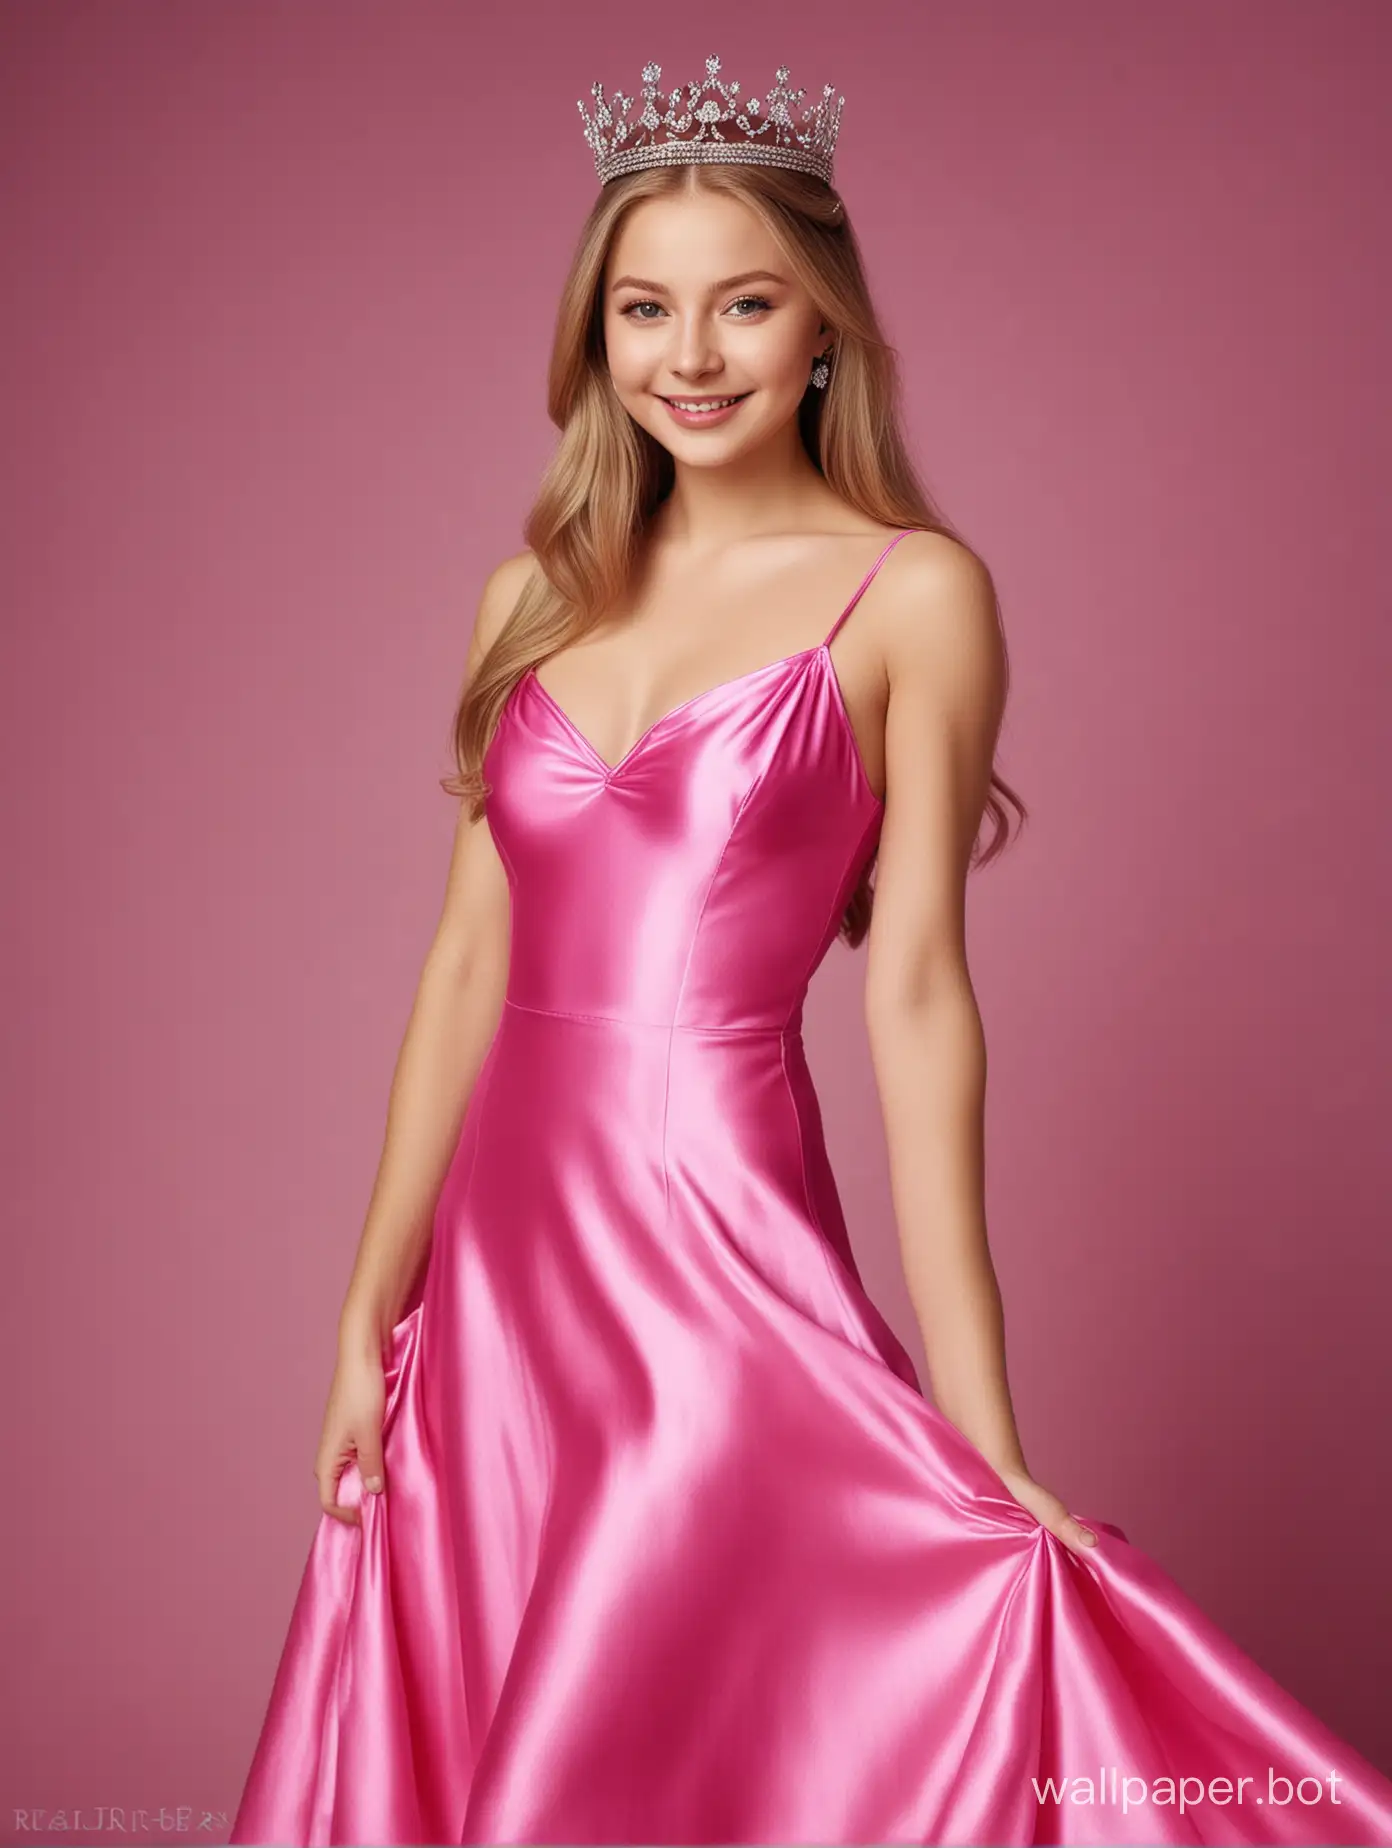 Radiant-Queen-Yulia-Lipnitskaya-in-Pink-Slip-Dress-and-Crown